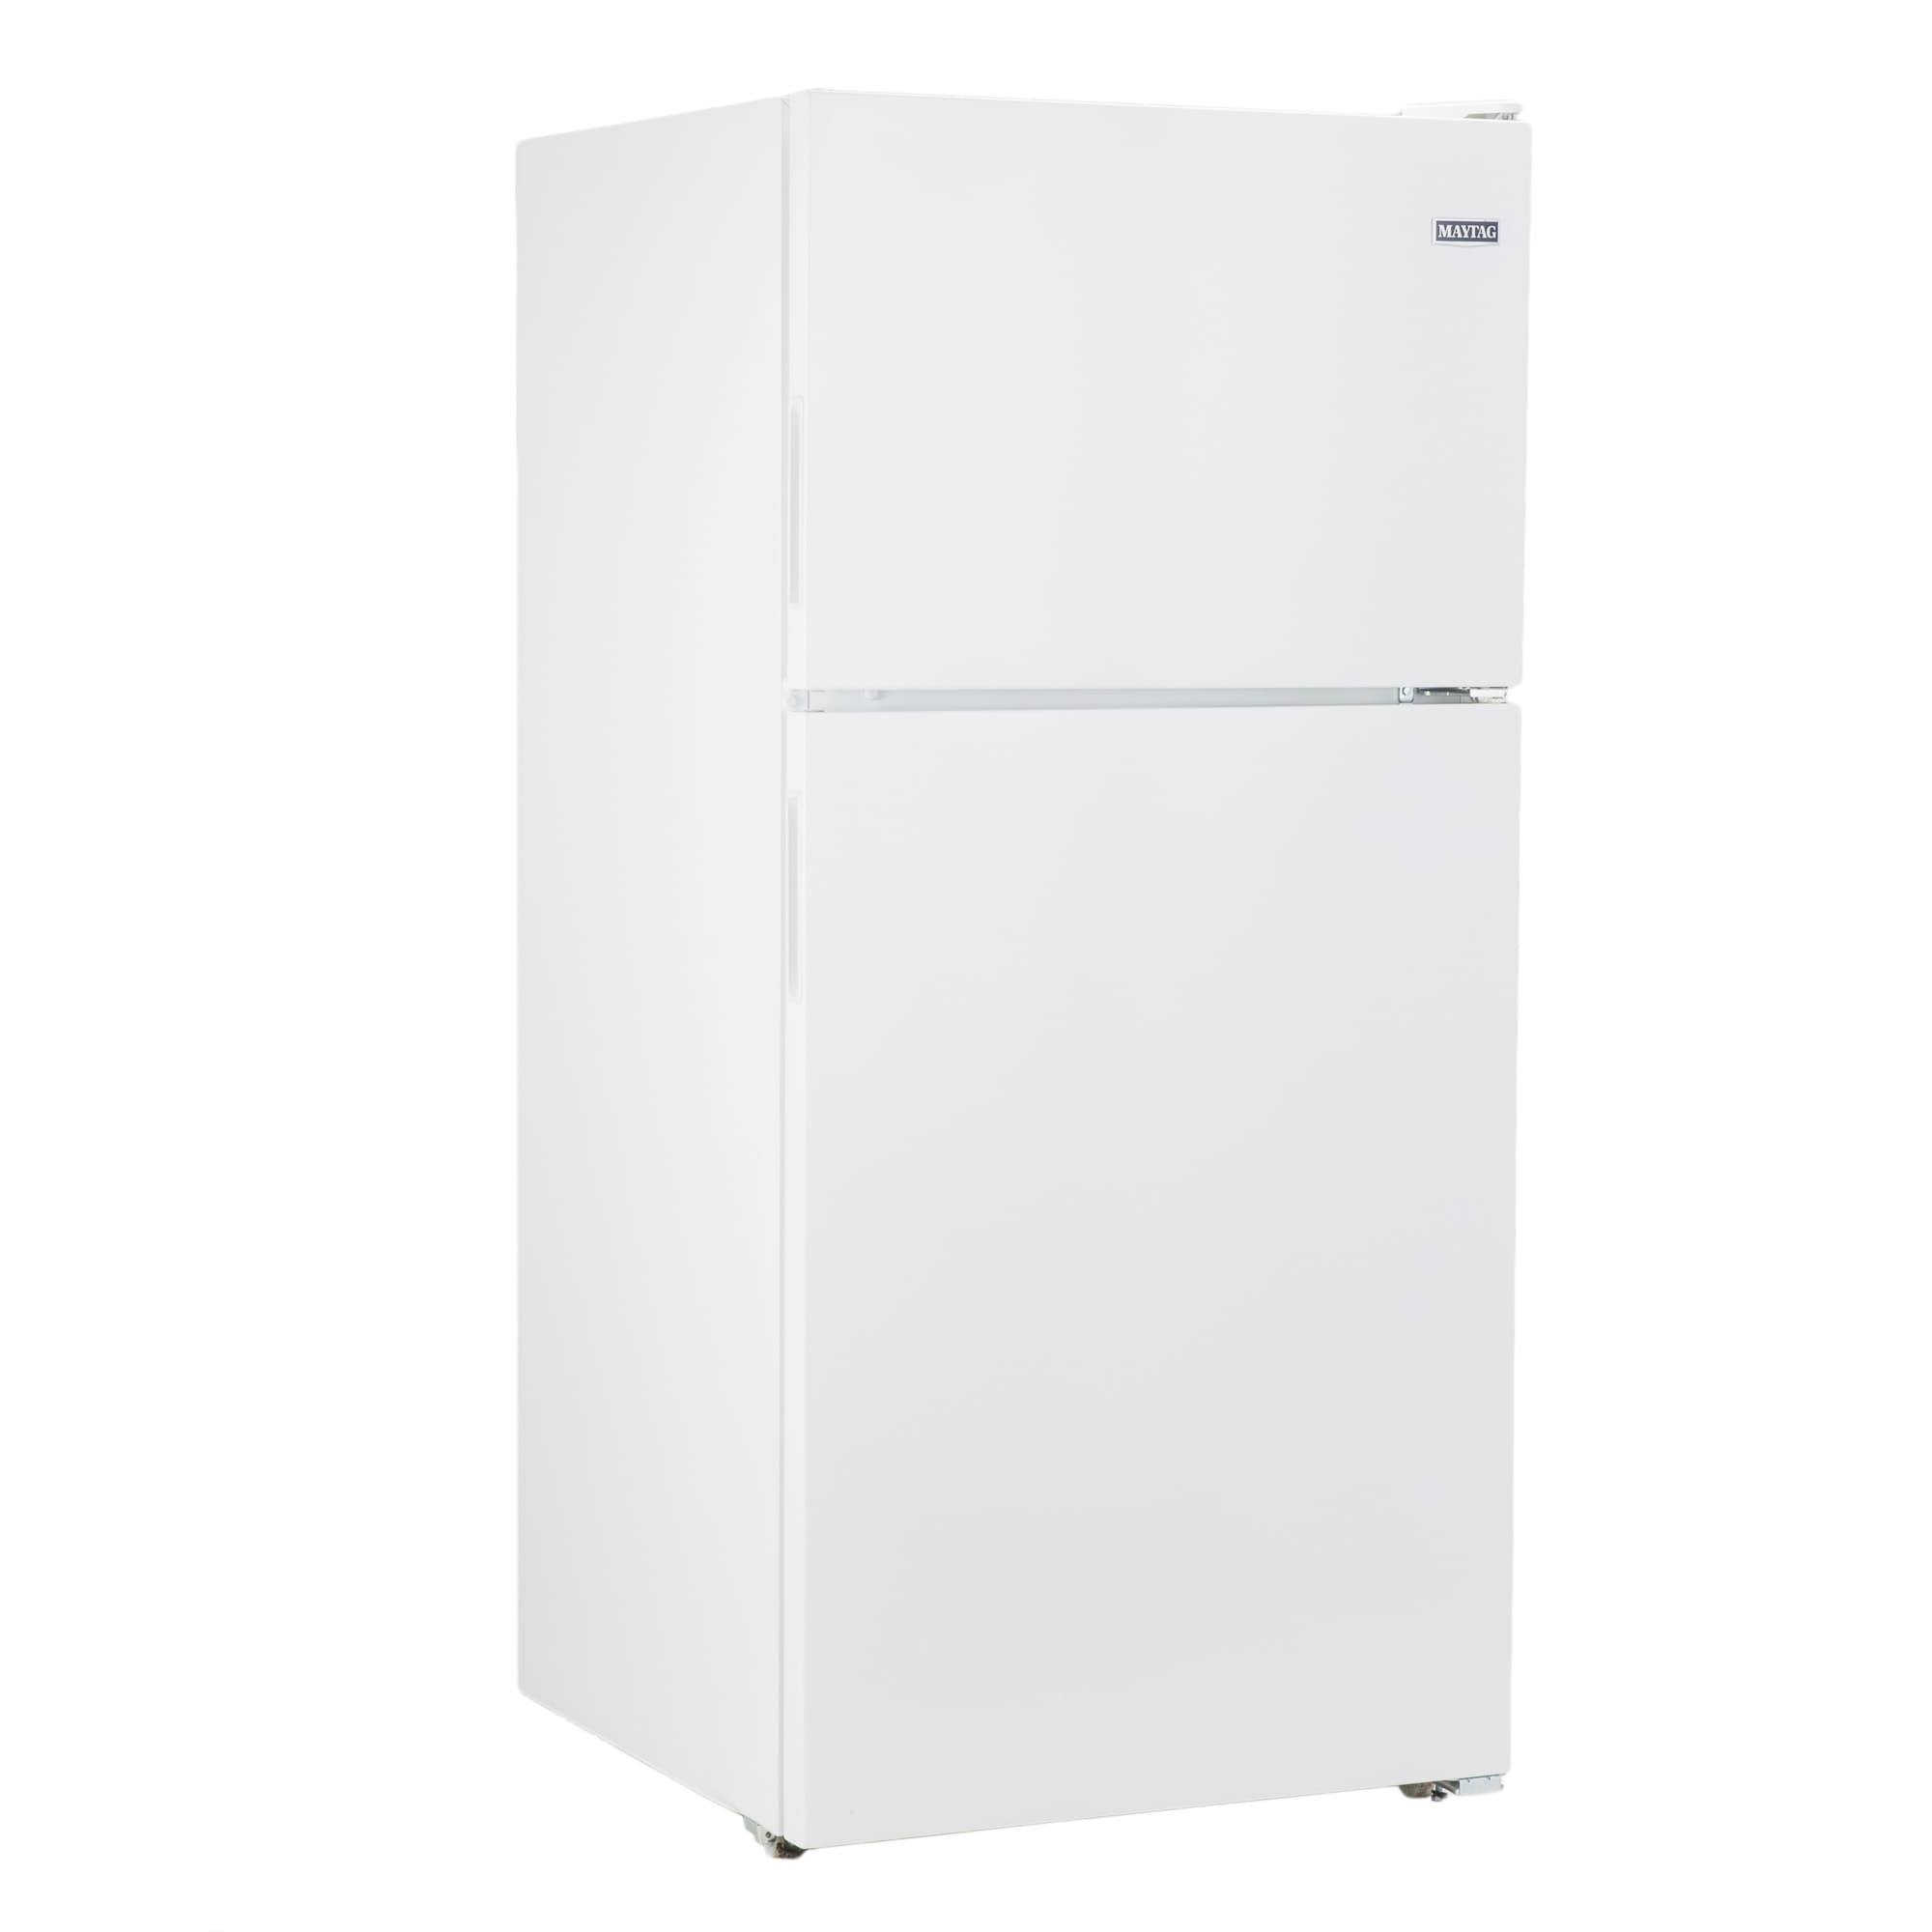 Maytag 18 cu. ft. Top Freezer Refrigerator in White MRT118FFFH